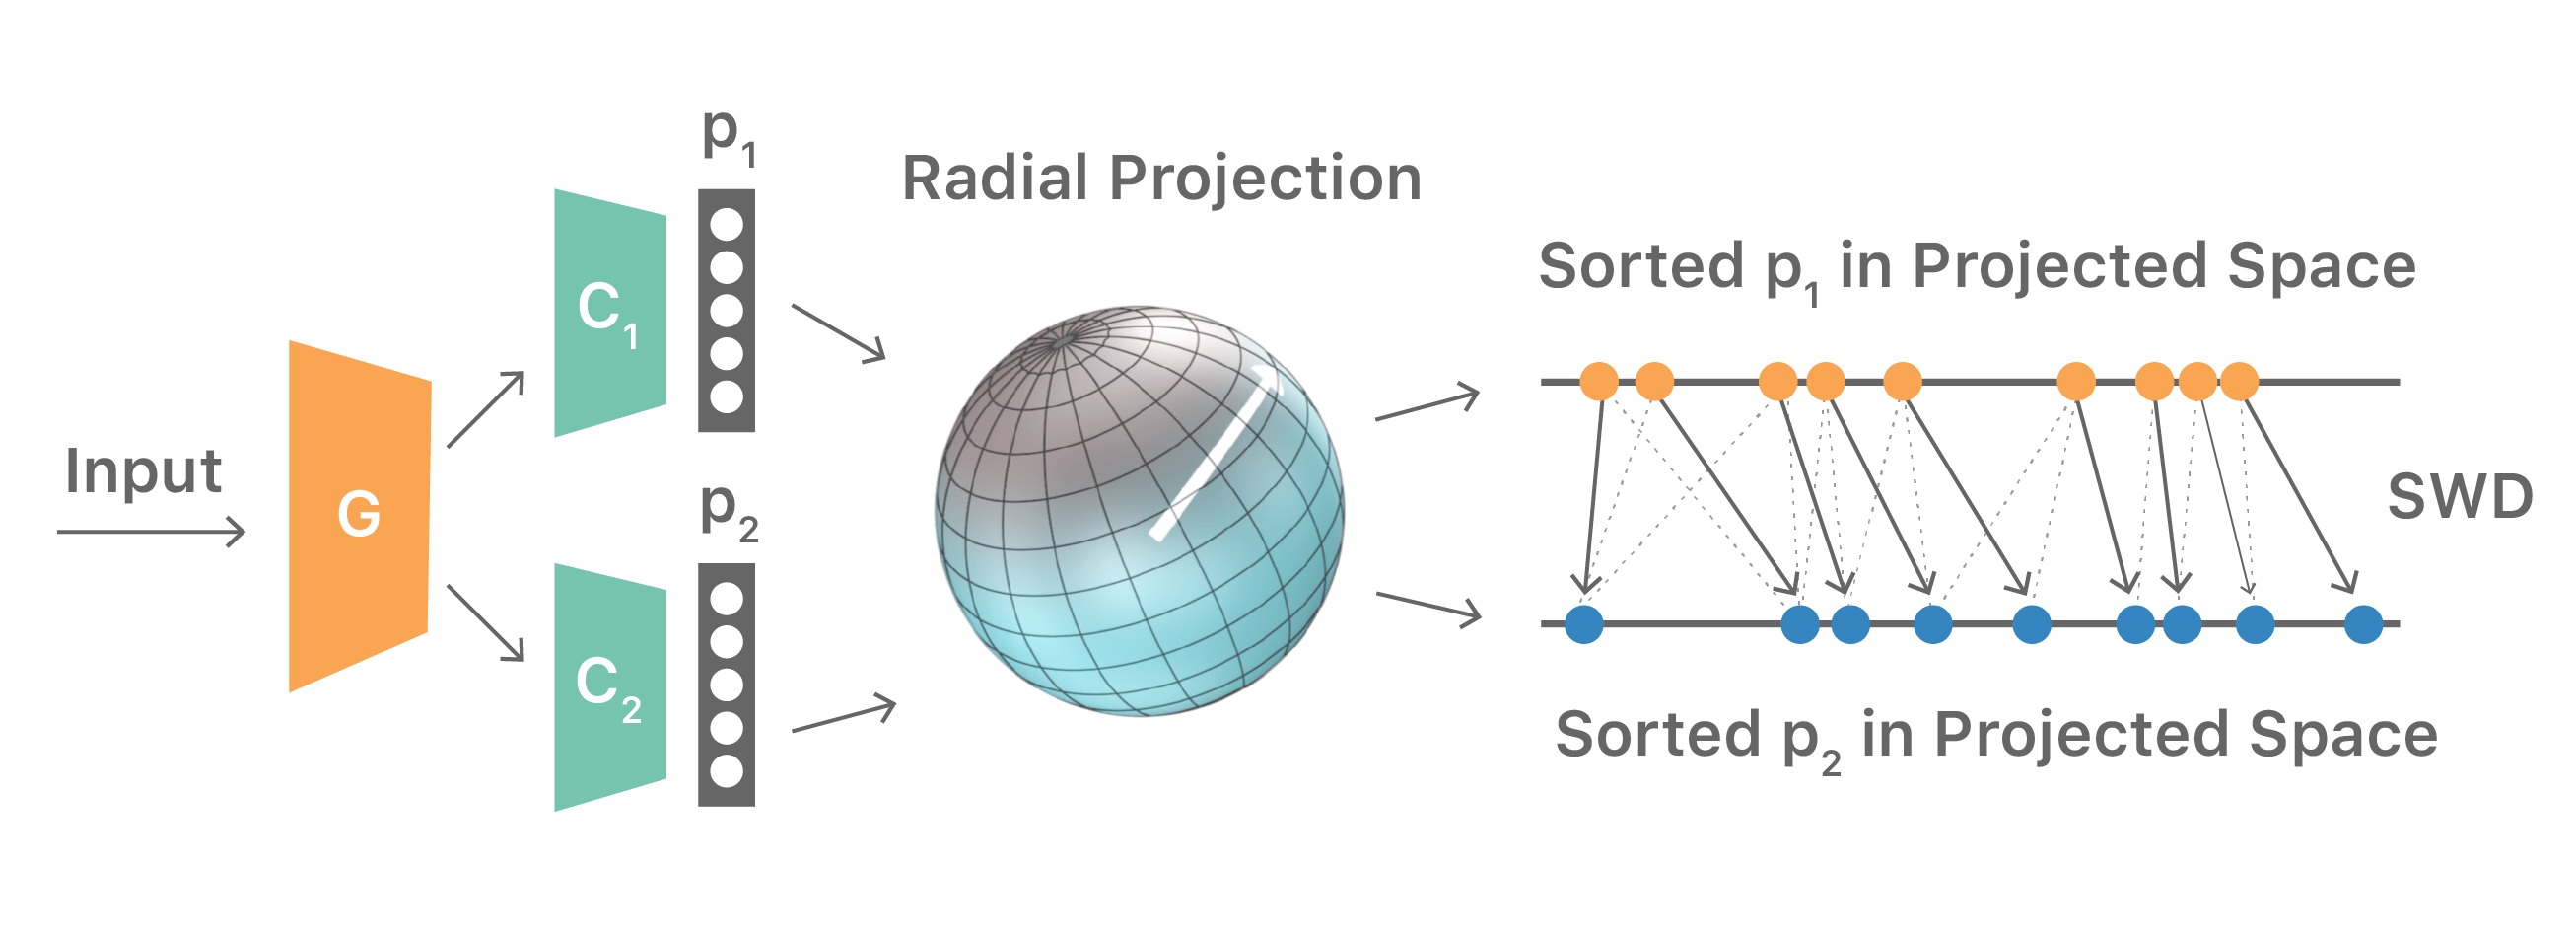 An illustration of the sliced Wasserstein discrepancy (SWD) computation